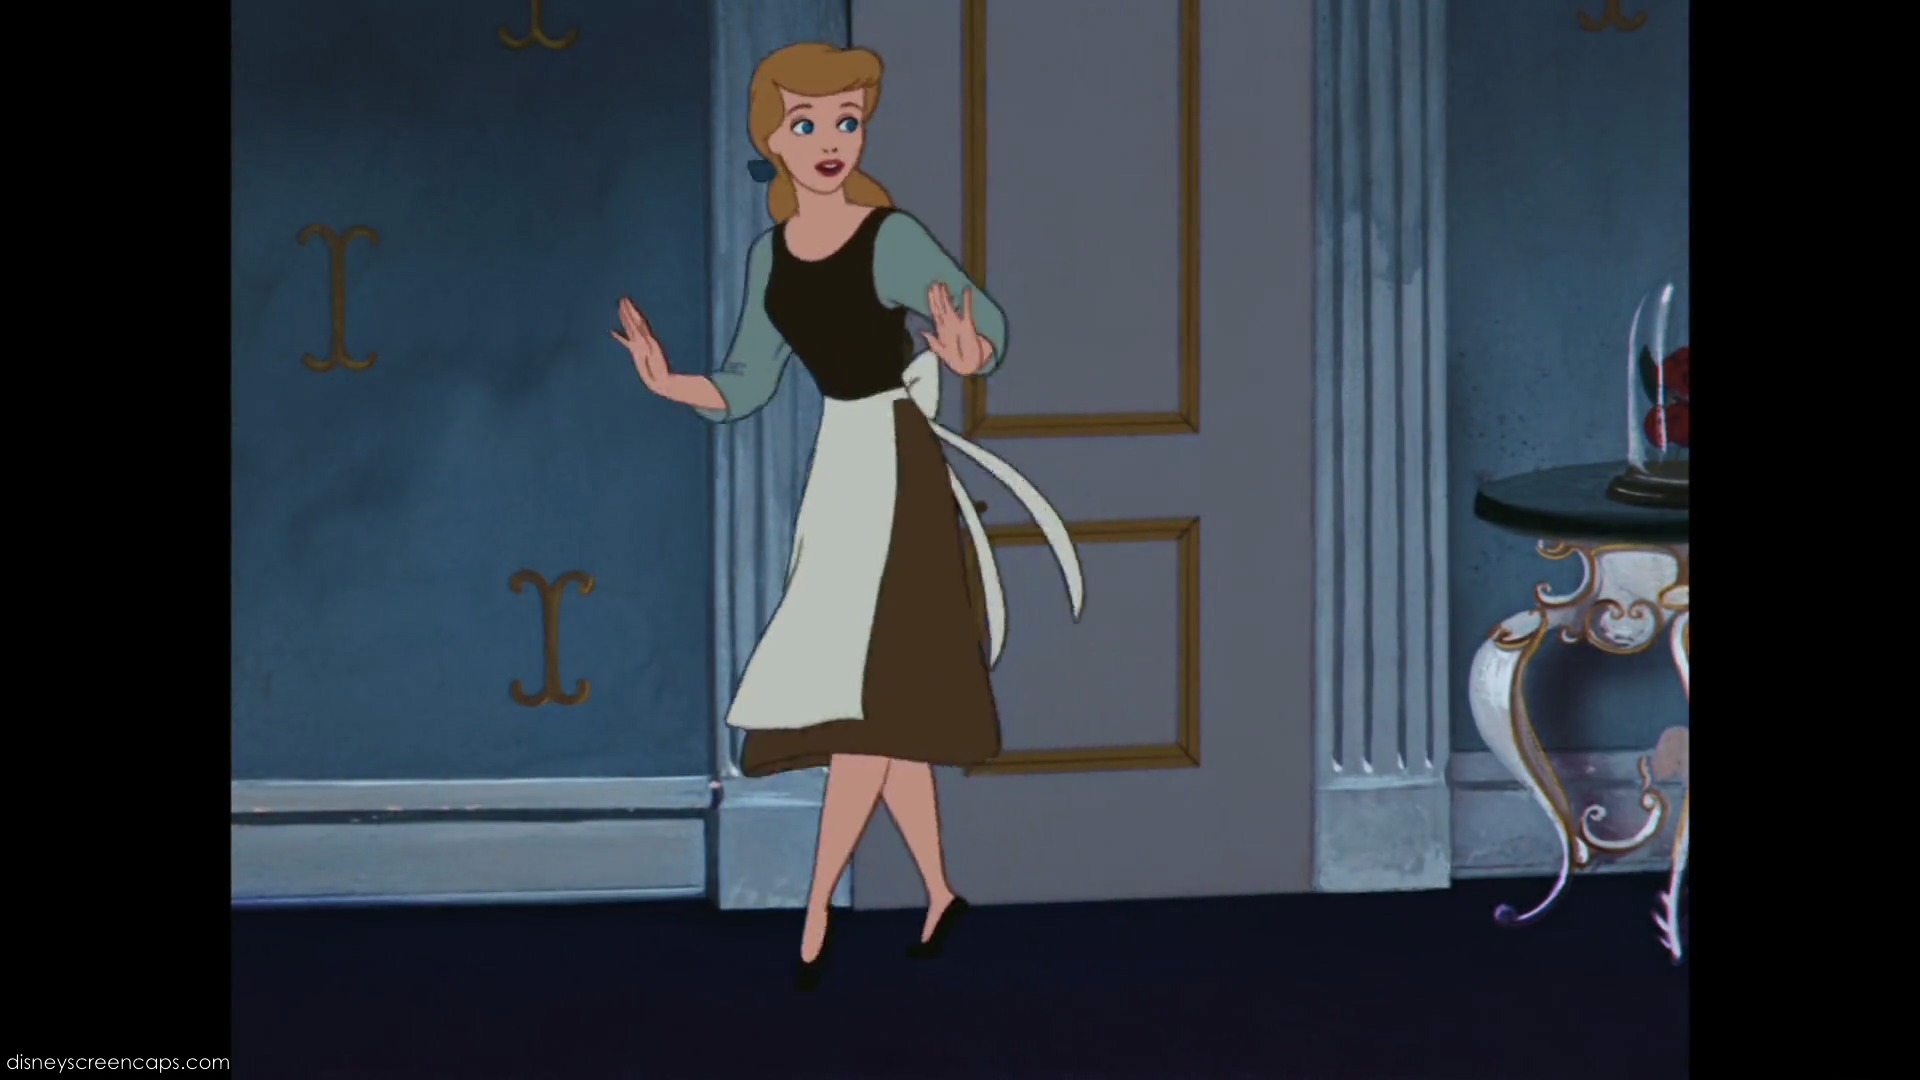 Disney Princess Dresses | cheap N crafty Mom